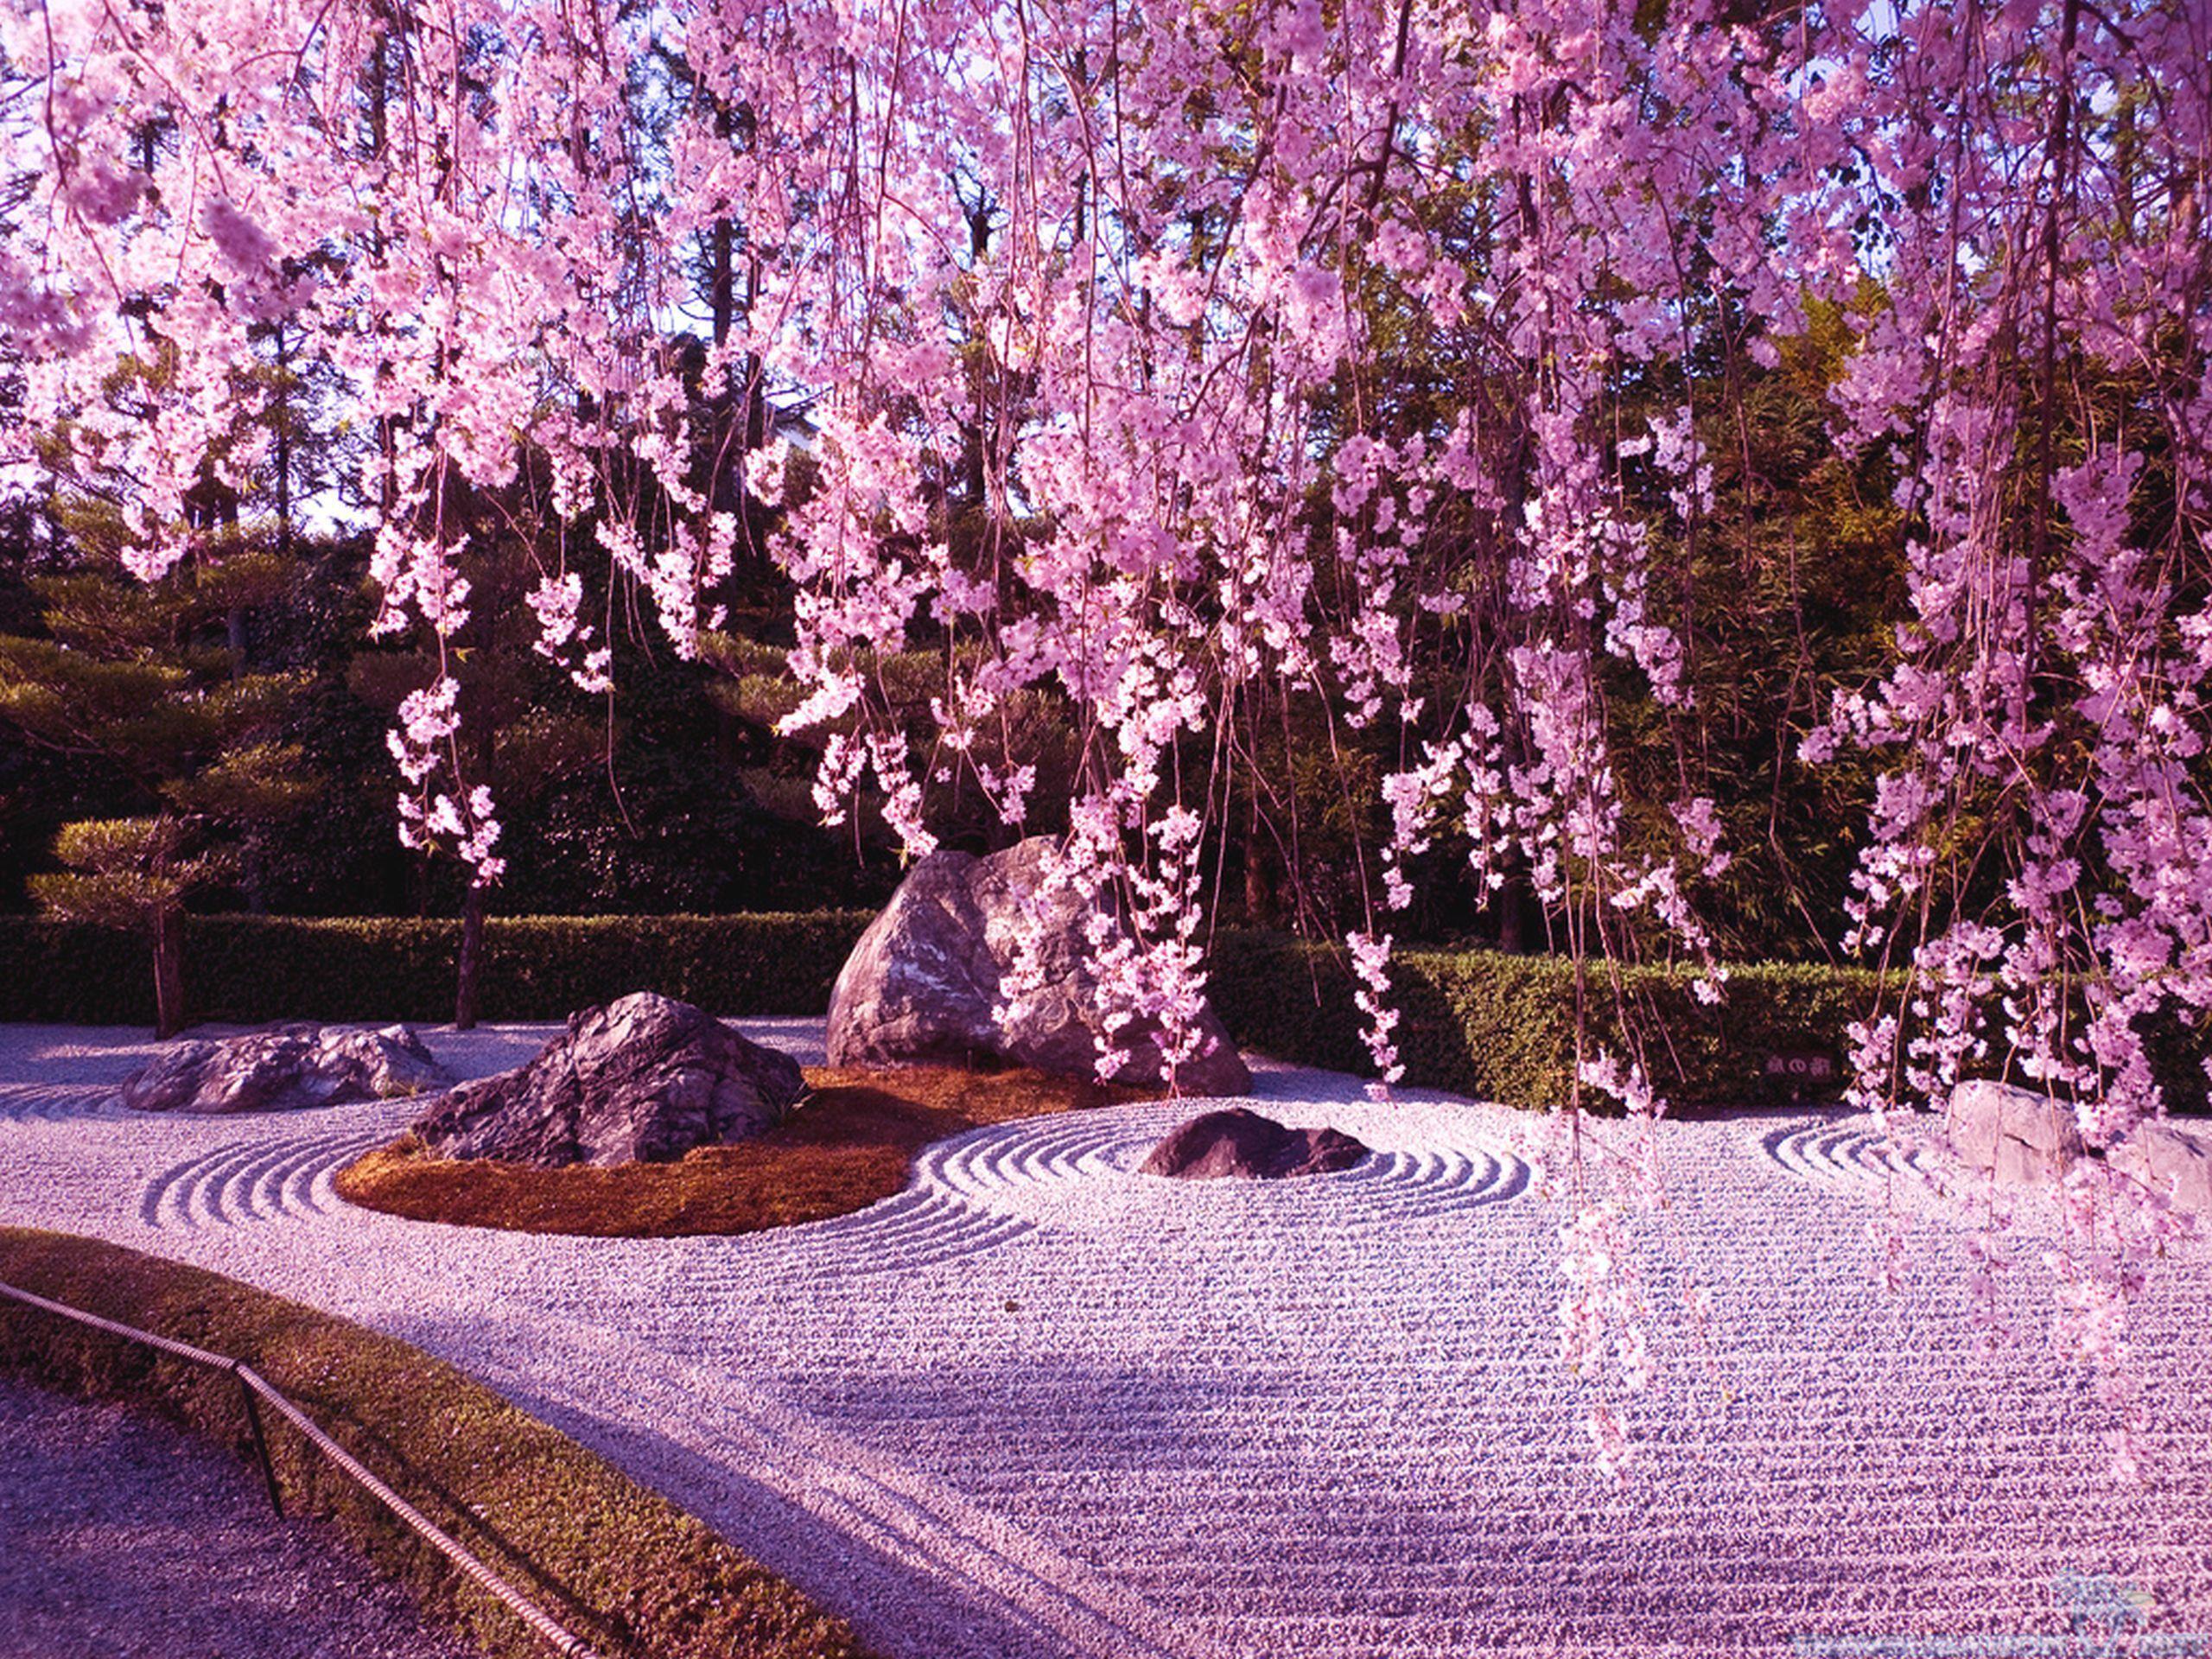 Kyoto Cherry Blossom Desktop Wallpapers - Top Free Kyoto Cherry Blossom